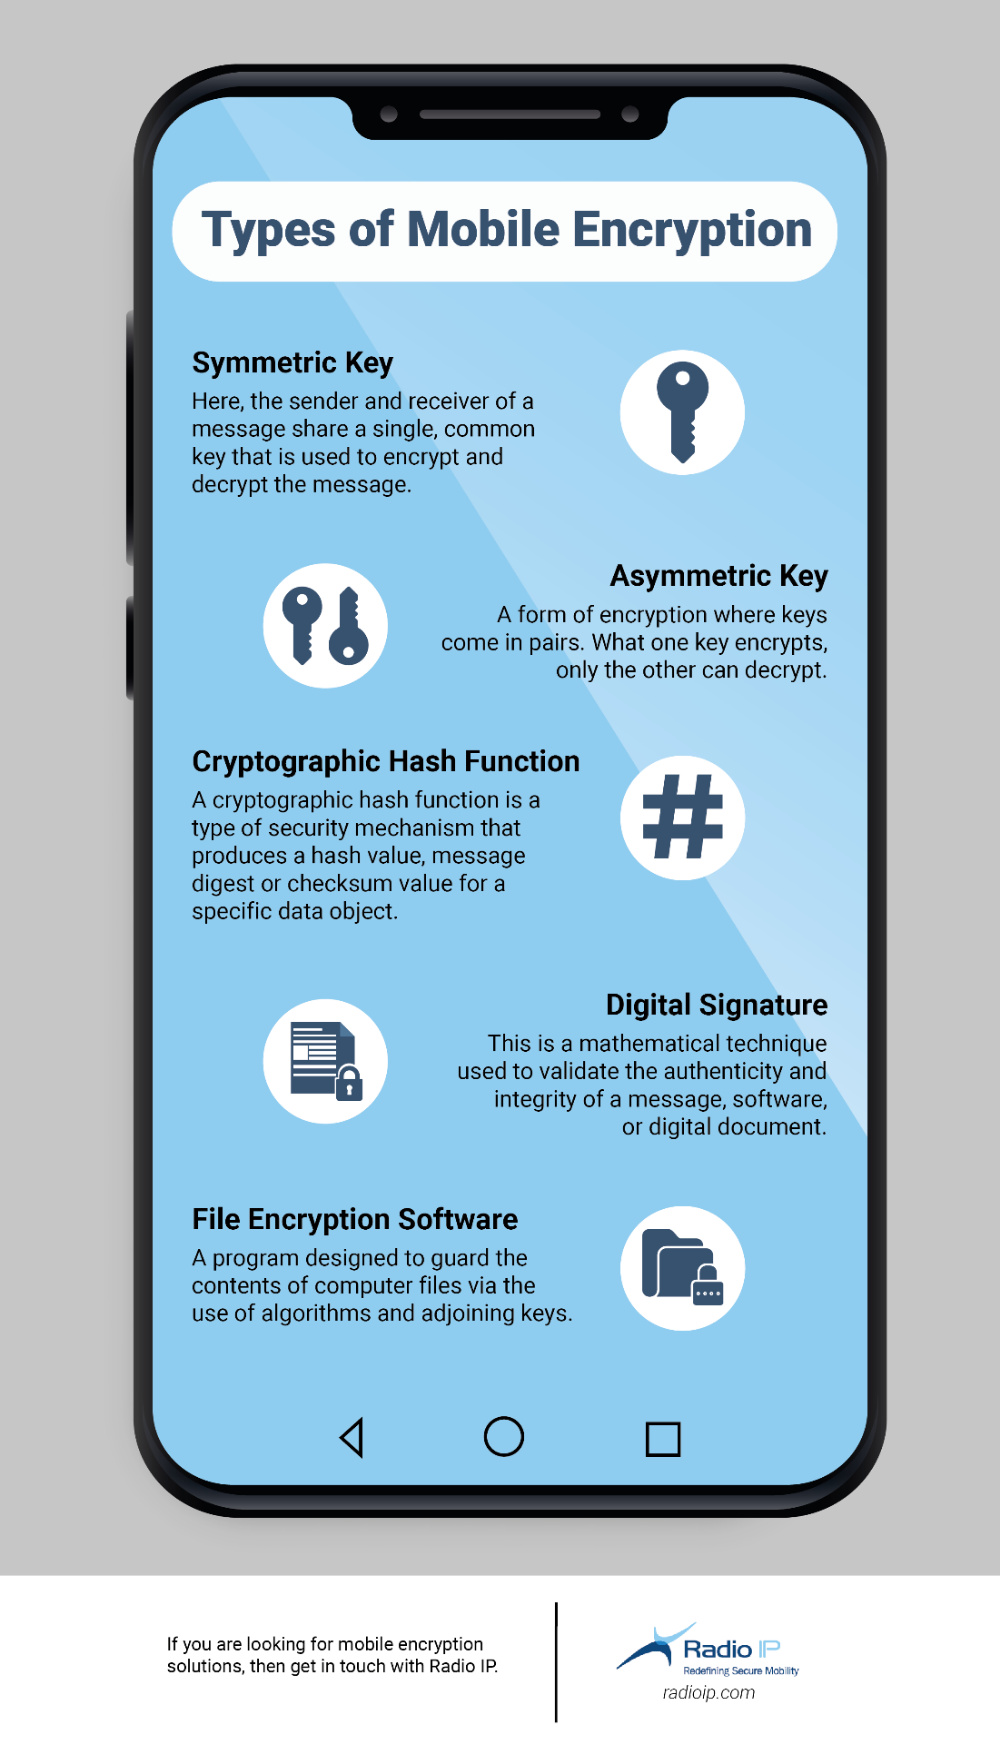 Types of Mobile Encryption